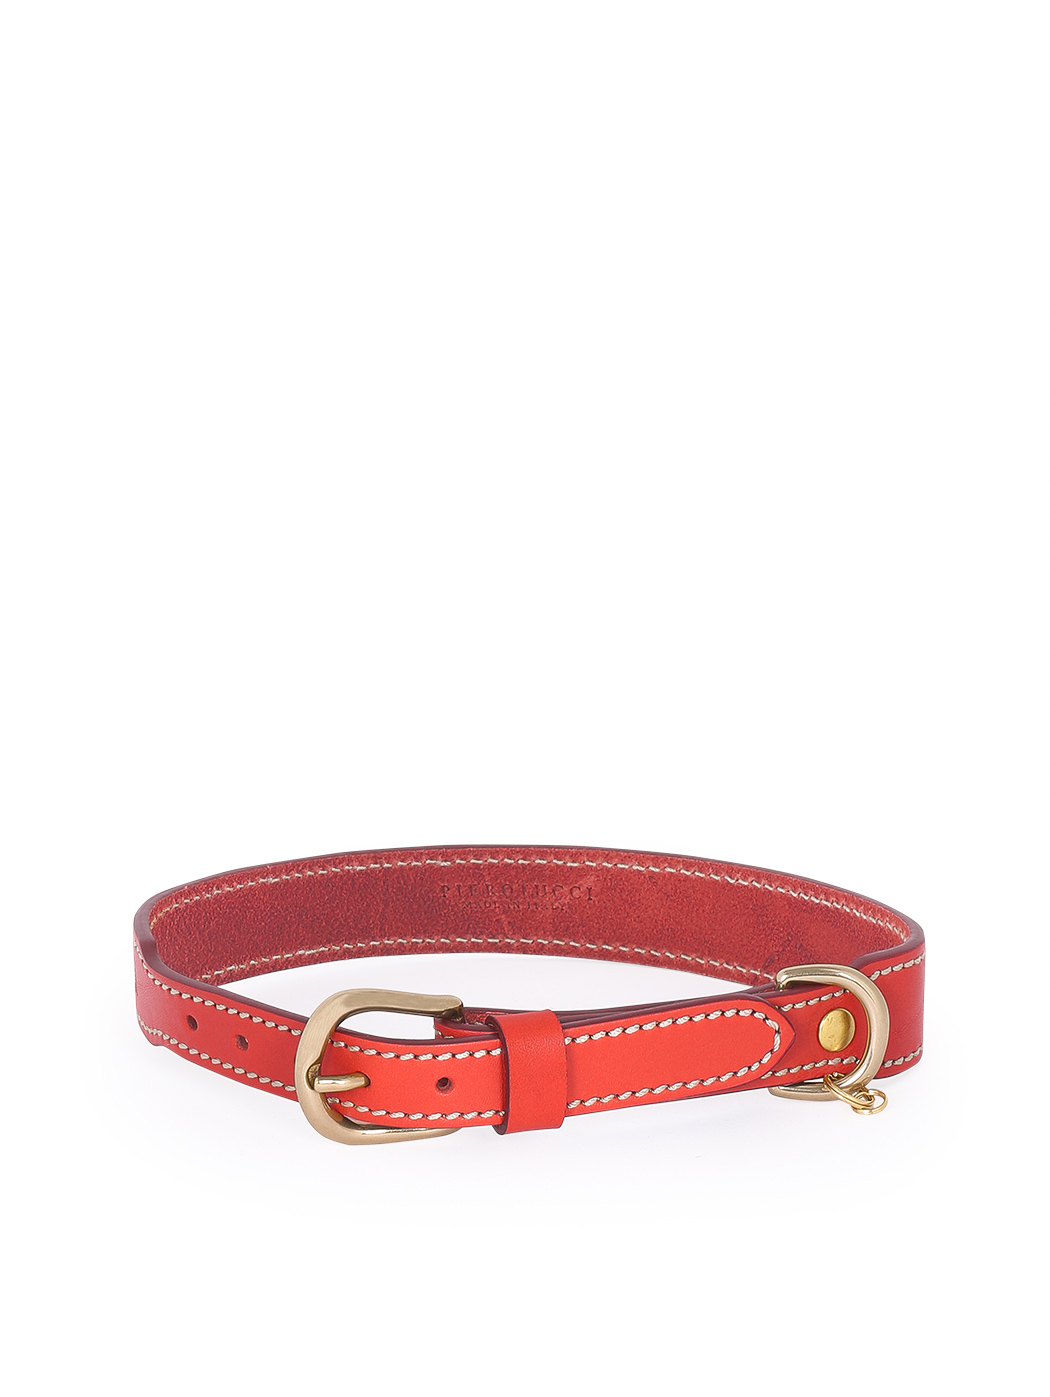 Poppy Red Dog Collar